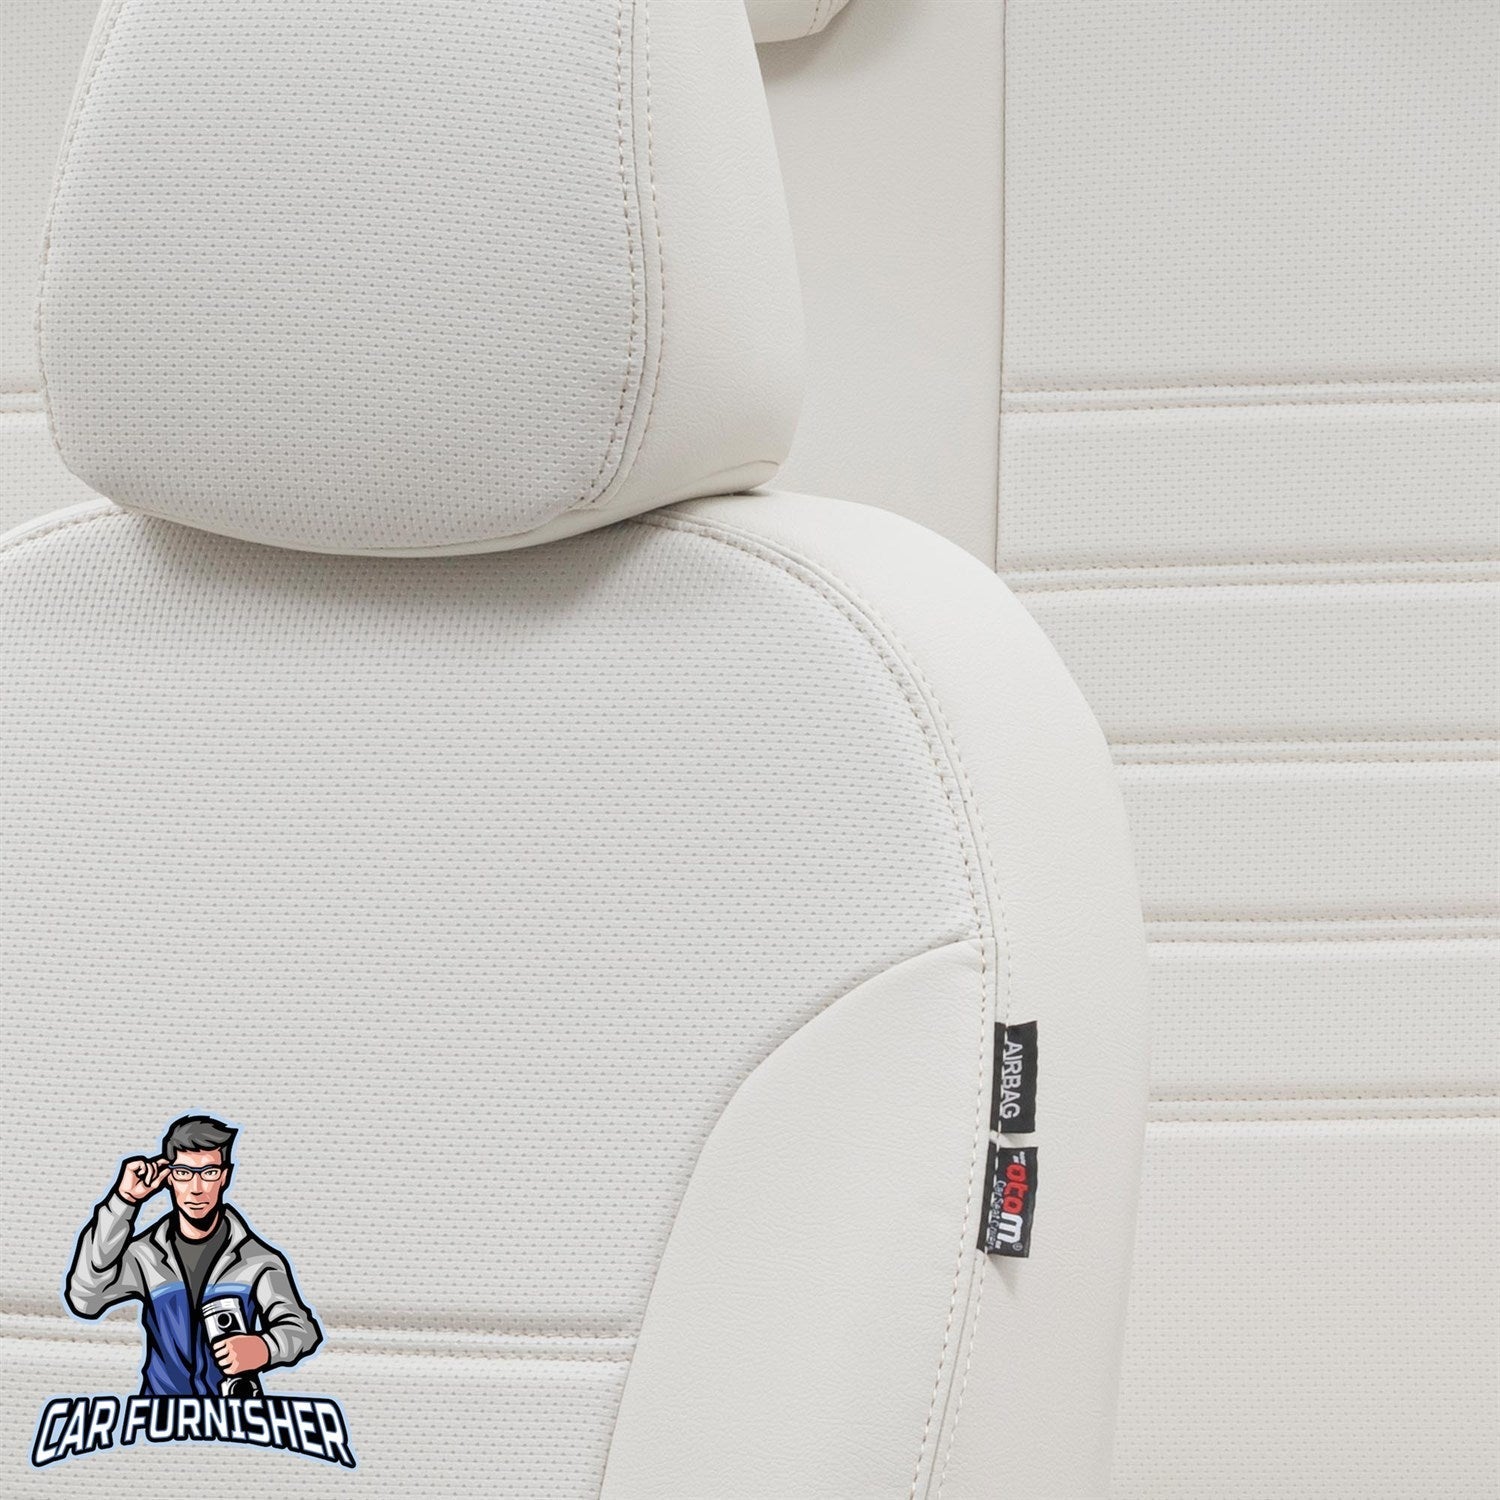 Chery Tiggo Seat Covers New York Leather Design Ivory Leather